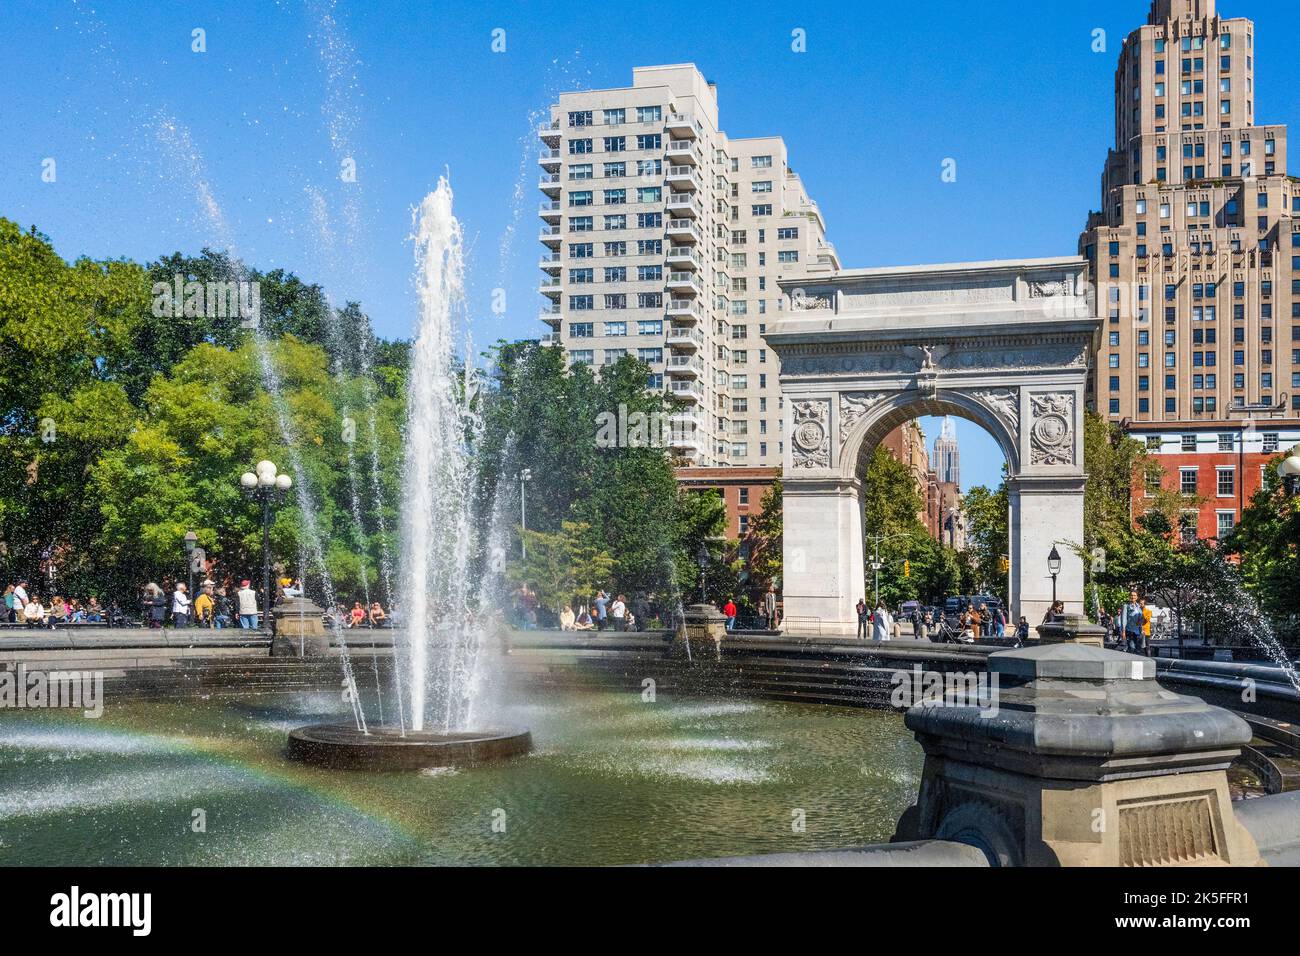 Washington Square Park, con turisti, fontana, arcobaleno nel bacino e Washington Square Arch sullo sfondo, New York City, USA Foto Stock